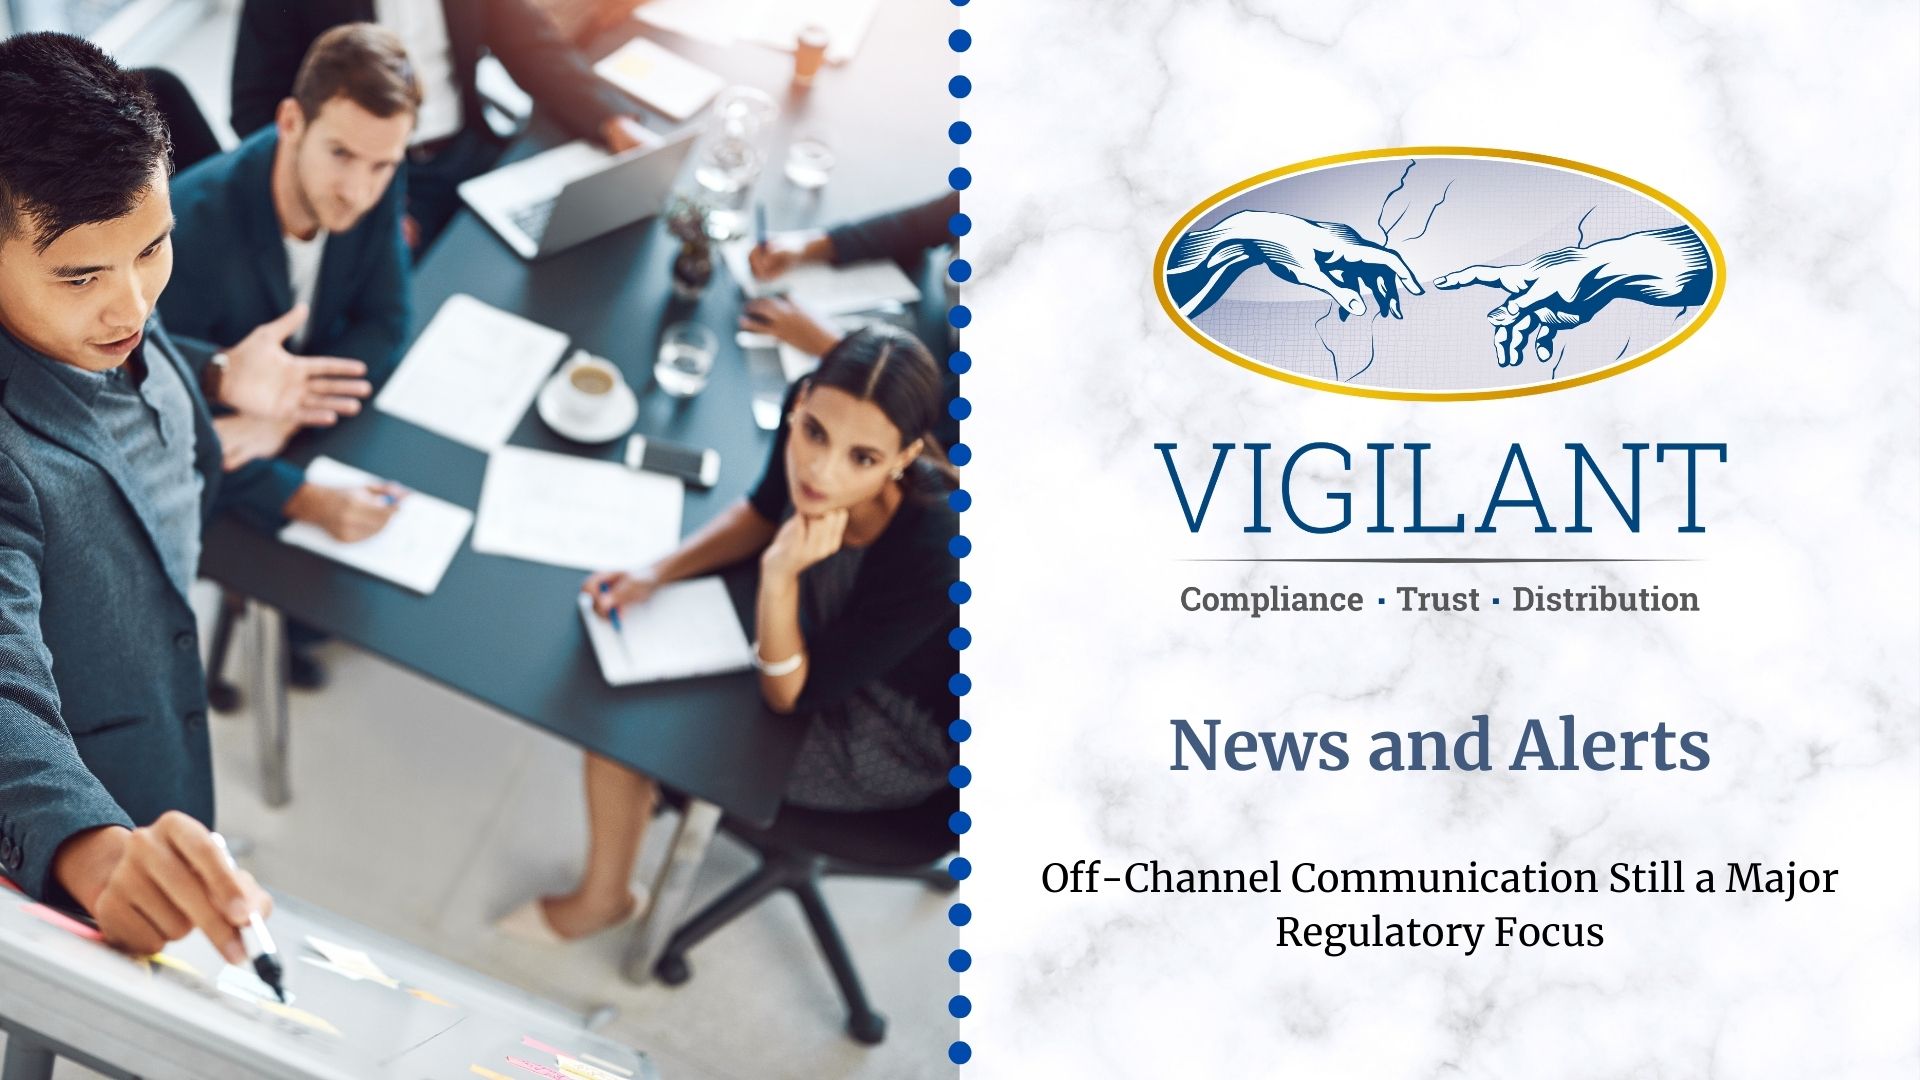 Off-Channel Communication Still a Major Regulatory Focus